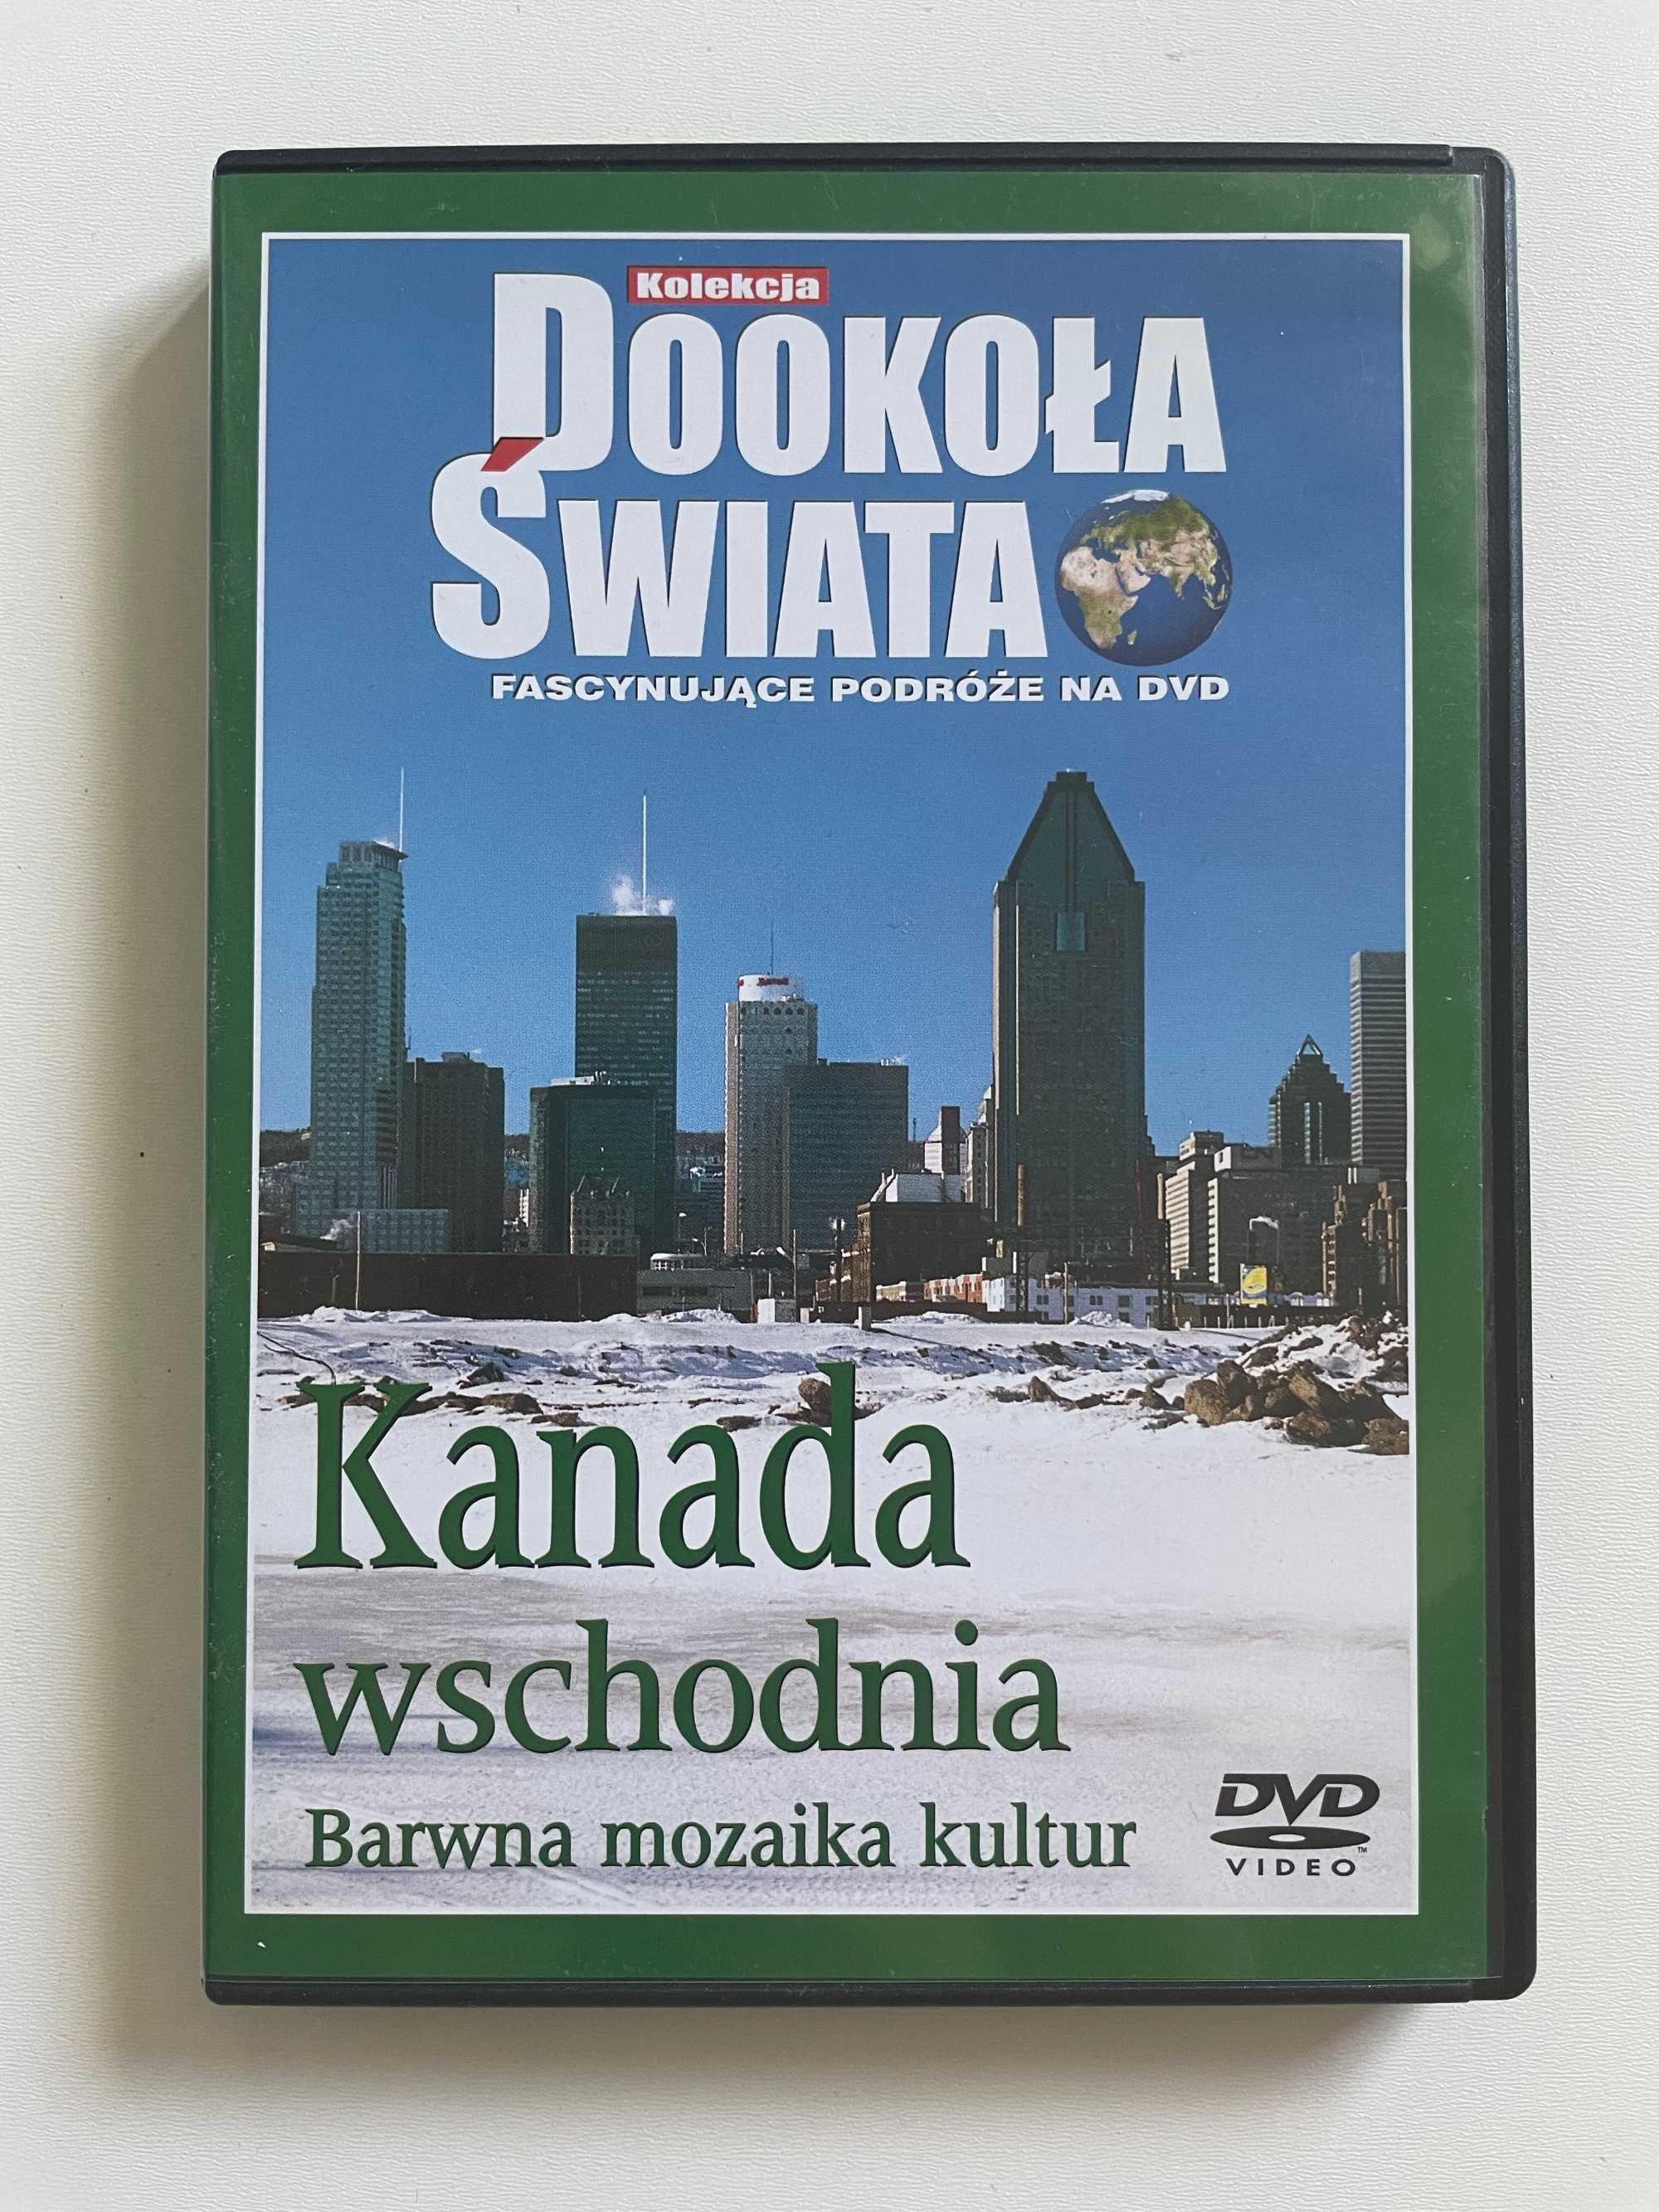 Seria Dookoła Świata DVD "Kanada wschodnia"